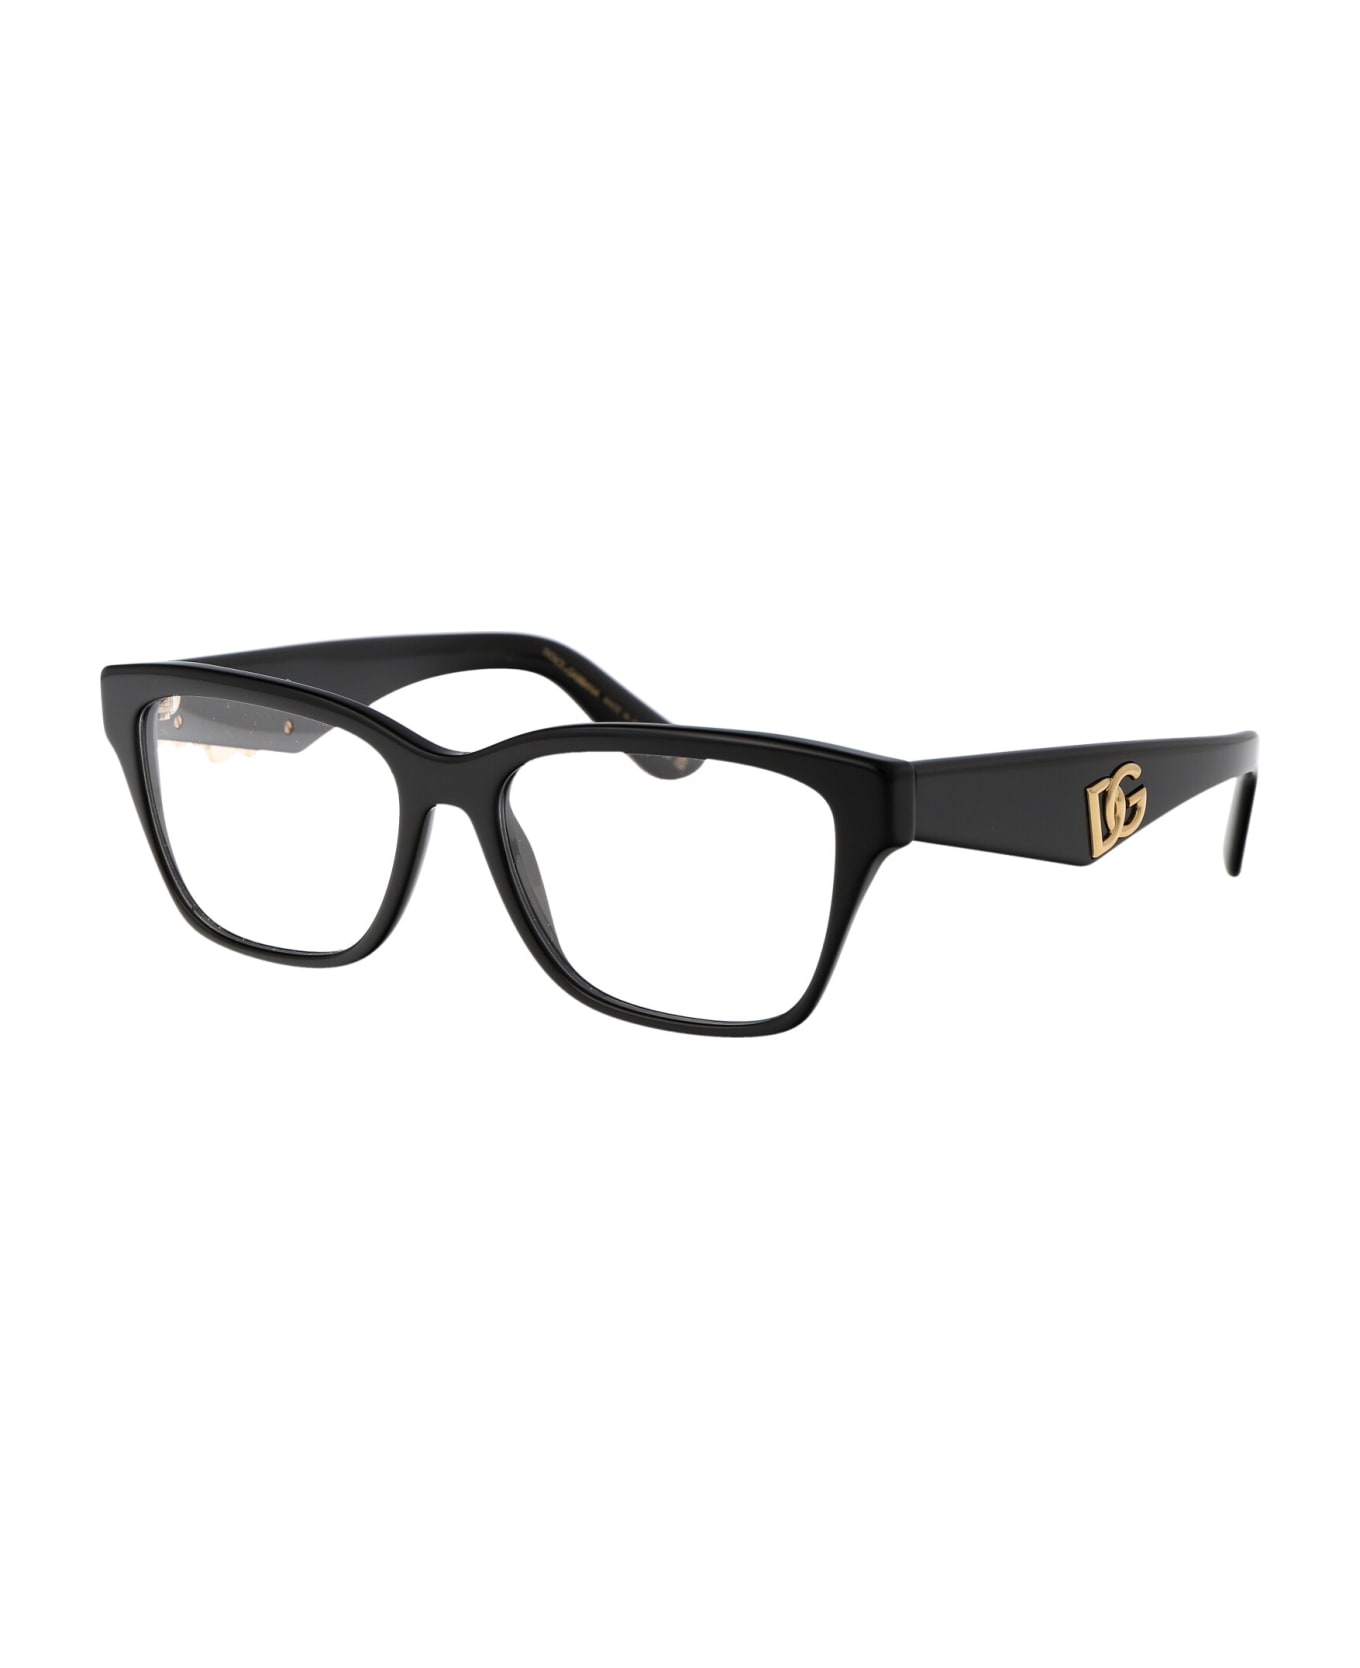 Dolce & Gabbana Eyewear 0dg3370 Glasses - 501 BLACK